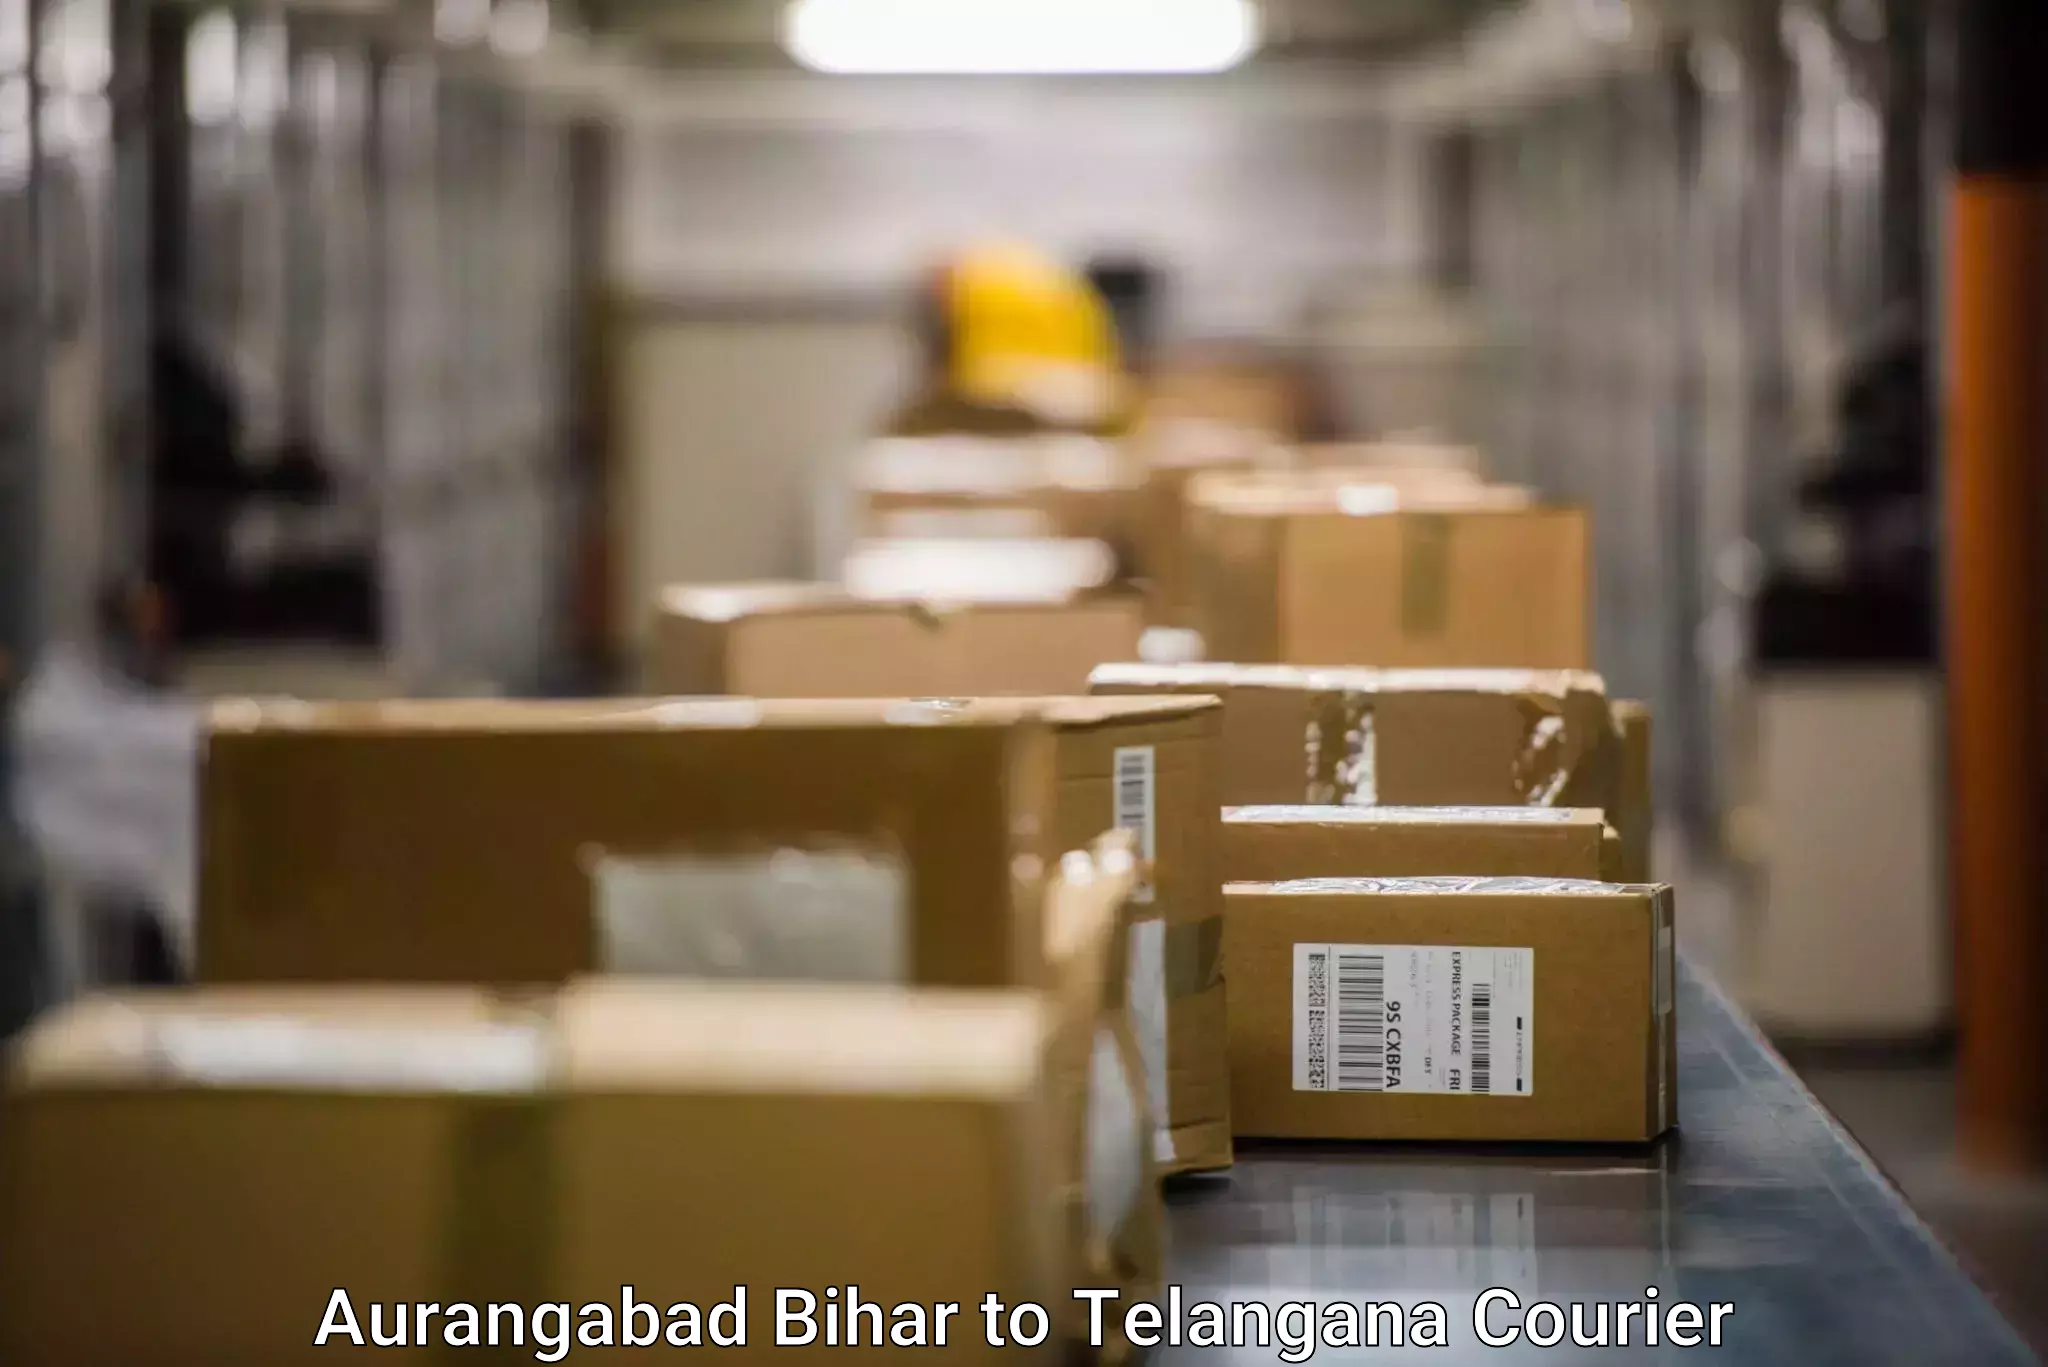 Next day courier Aurangabad Bihar to Telangana